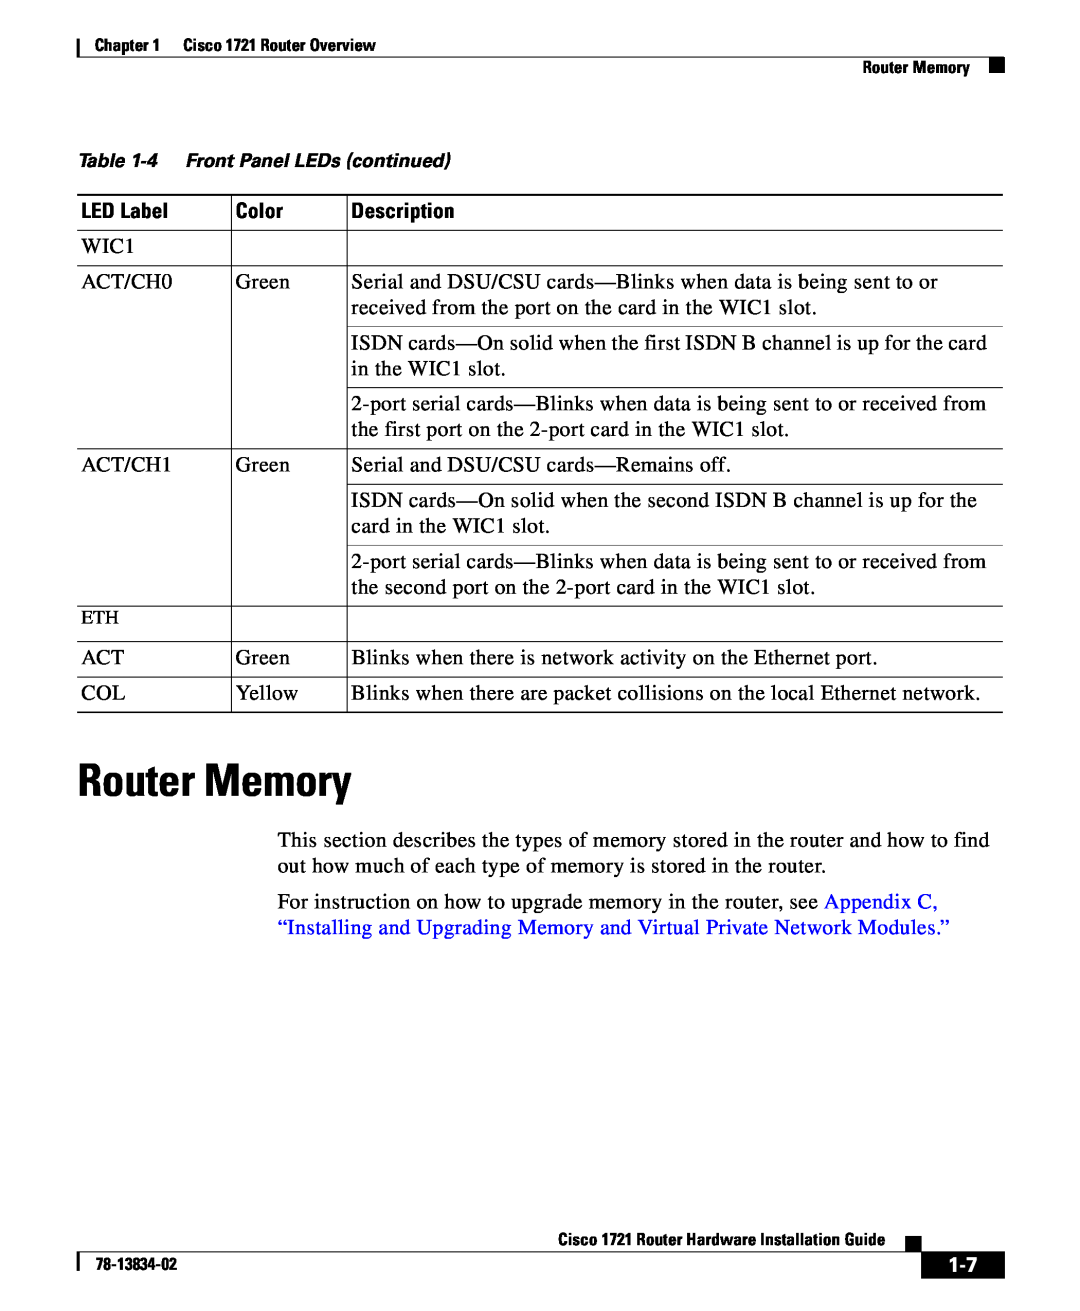 Cisco Systems 1721 manual Router Memory, LED Label, Color, Description, 4 Front Panel LEDs continued 